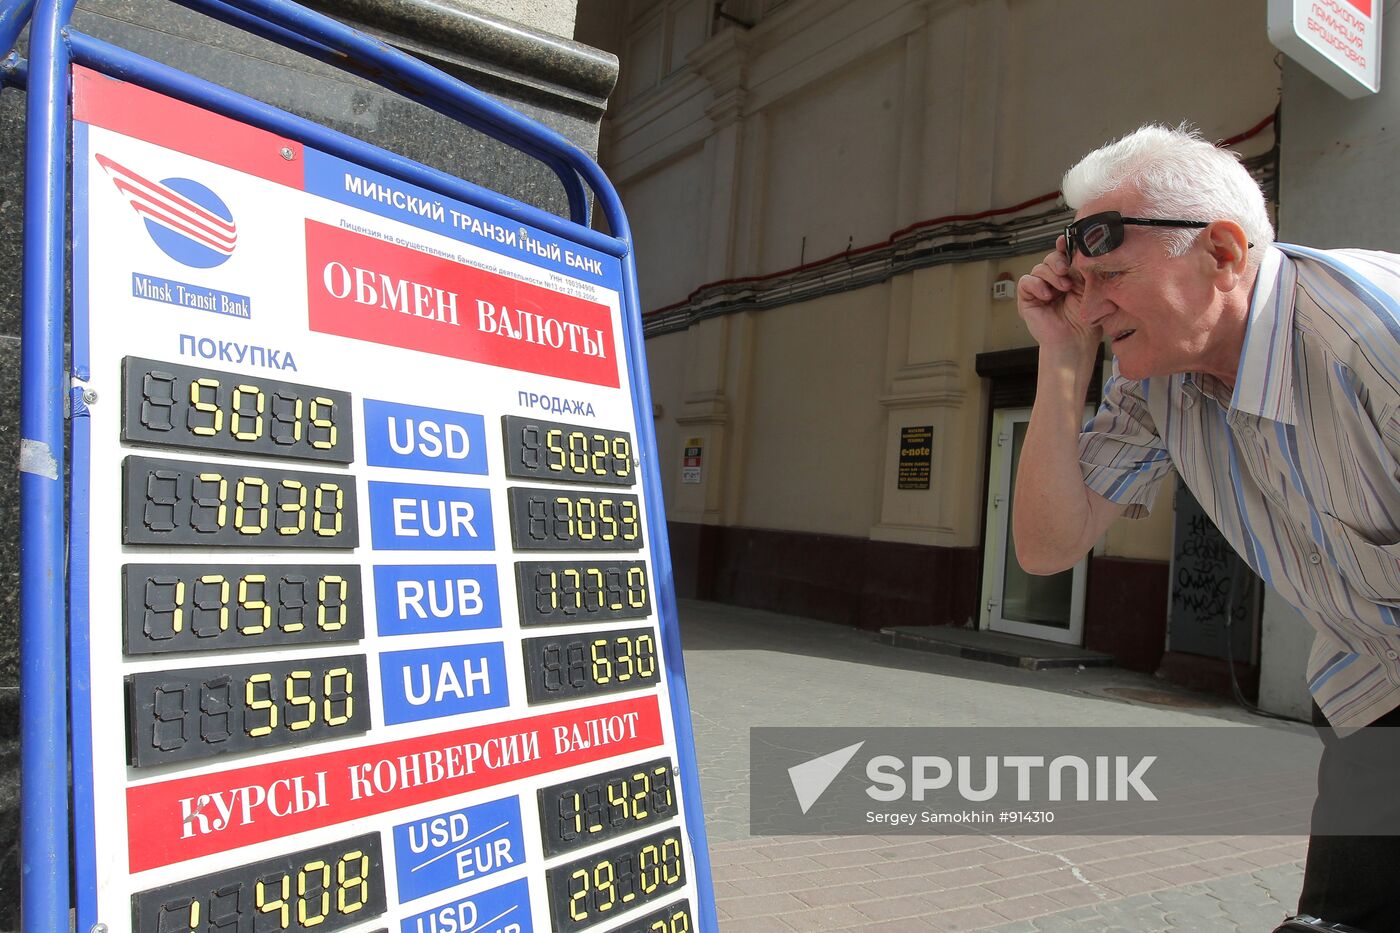 Currency exchange in Minsk